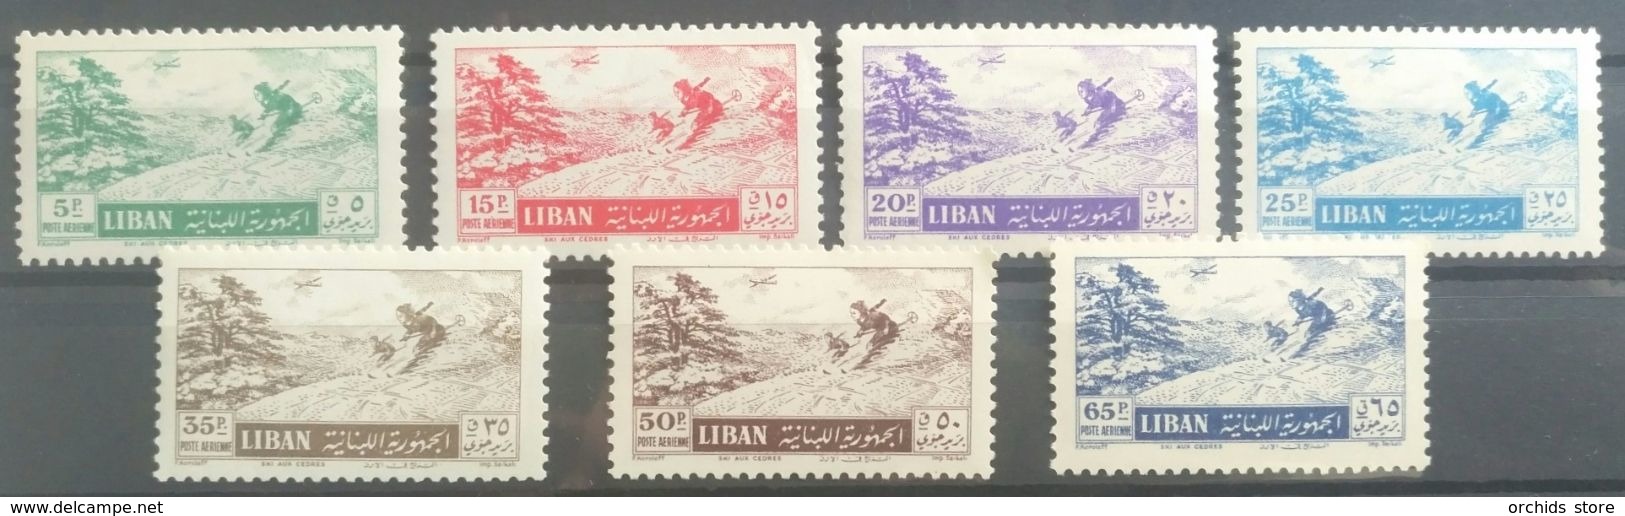 E11RM Lebanon 1955 Mi. 529-539 Complete Set 7v. - Skiers, Cedars - MNH/MLH - Cv 44 EUR - Lebanon